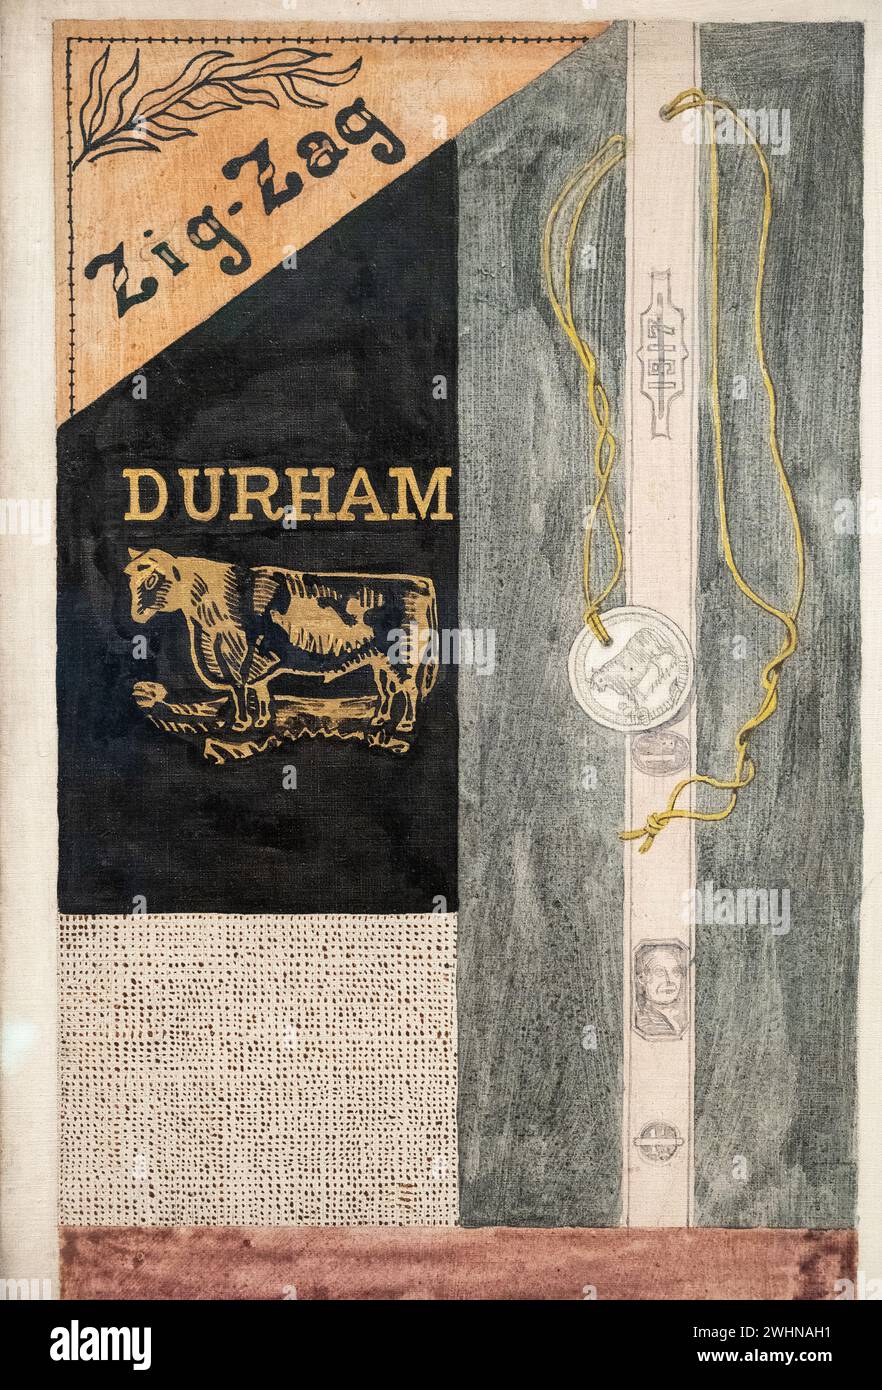 Stuart Davis 1921 oil on canvas painting 'Bull Durham' at the Baltimore Museum of Art Stock Photo